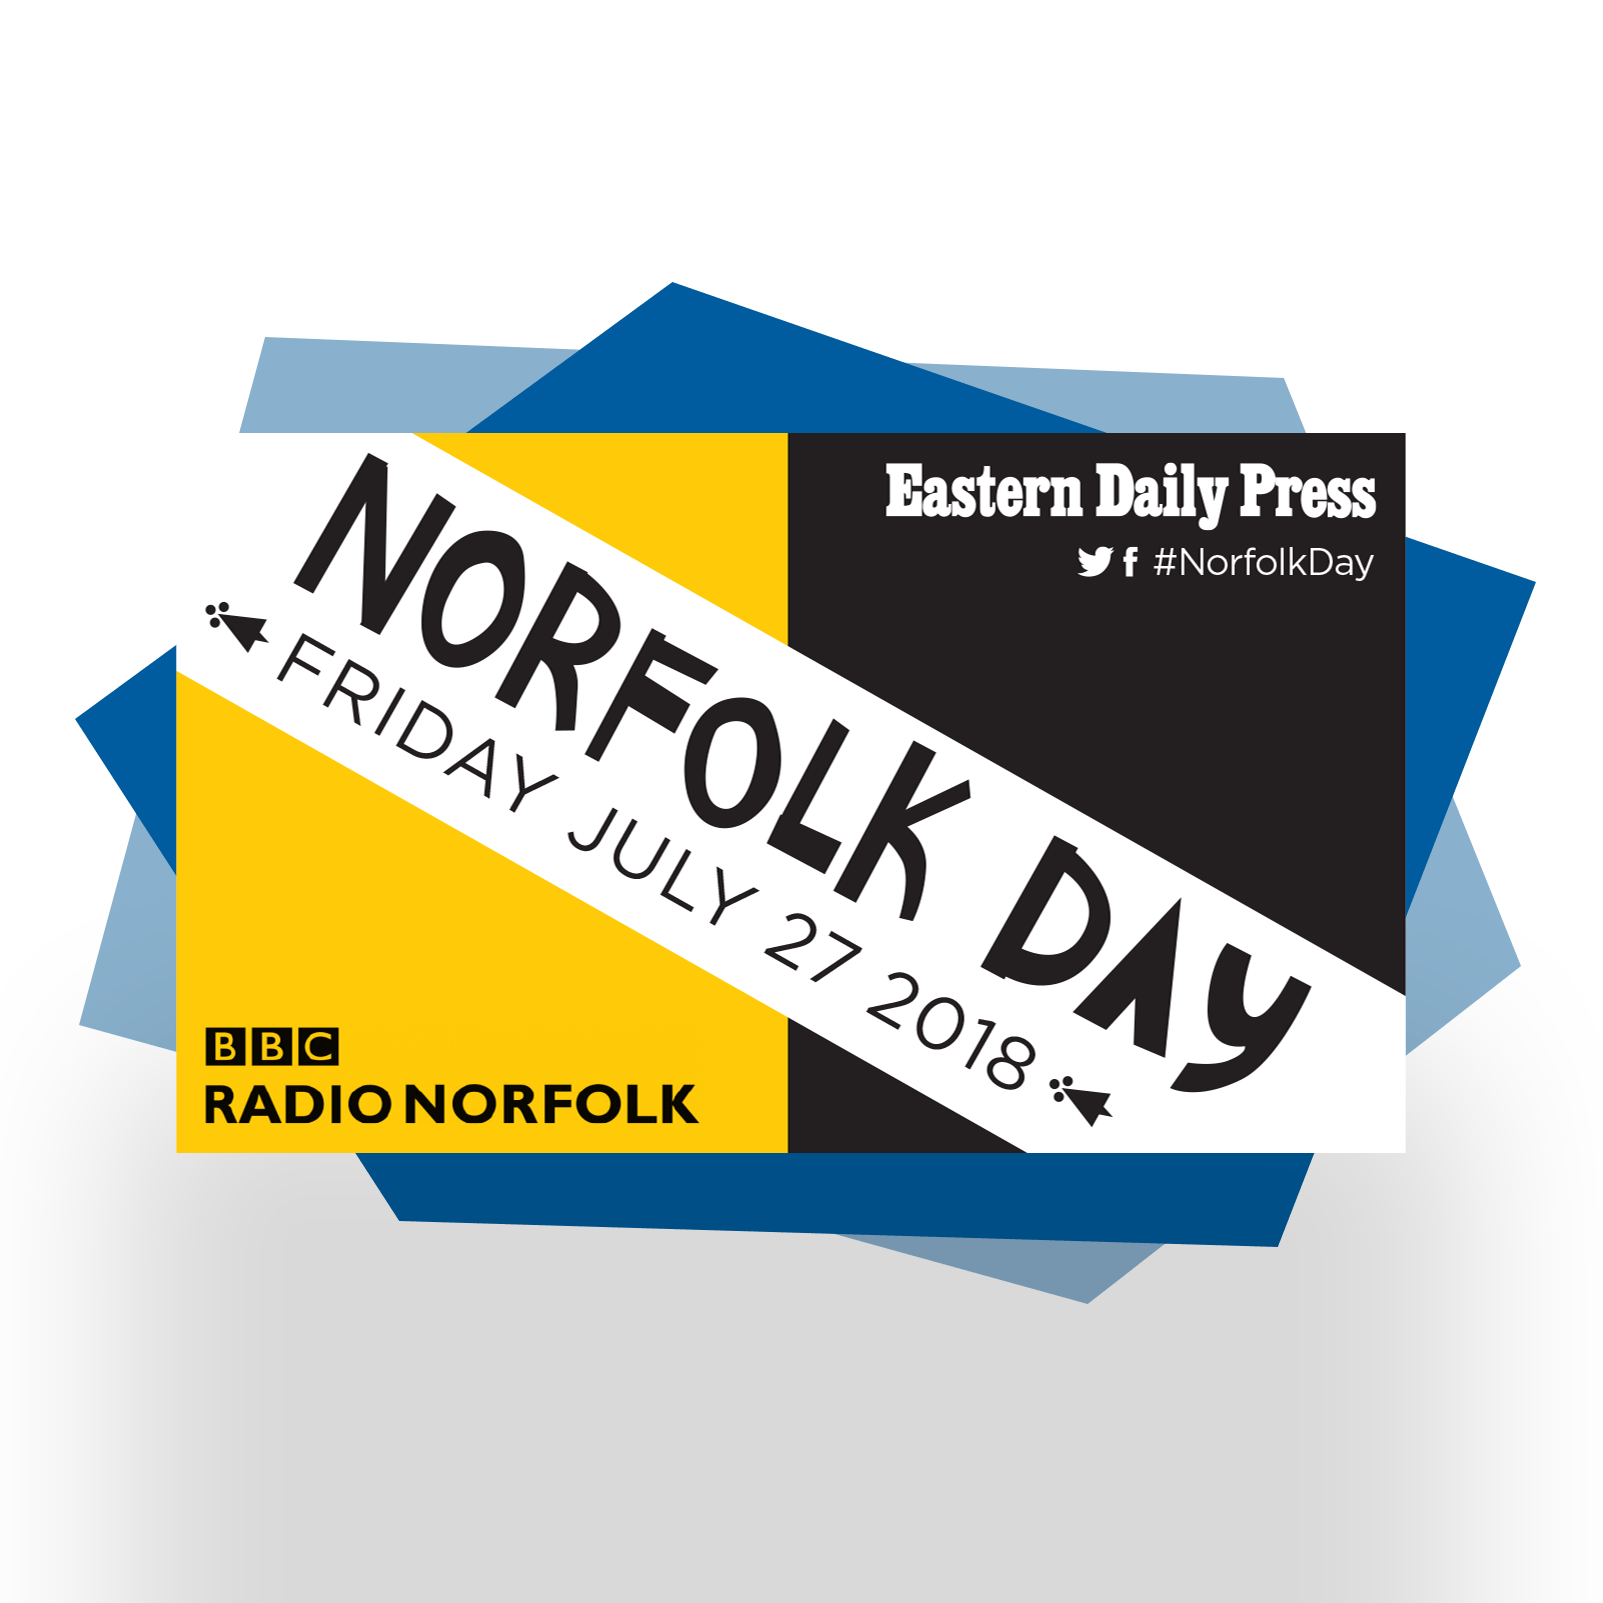 Richardson's Logo - Norfolk Day logo with social media's Boating Holidays